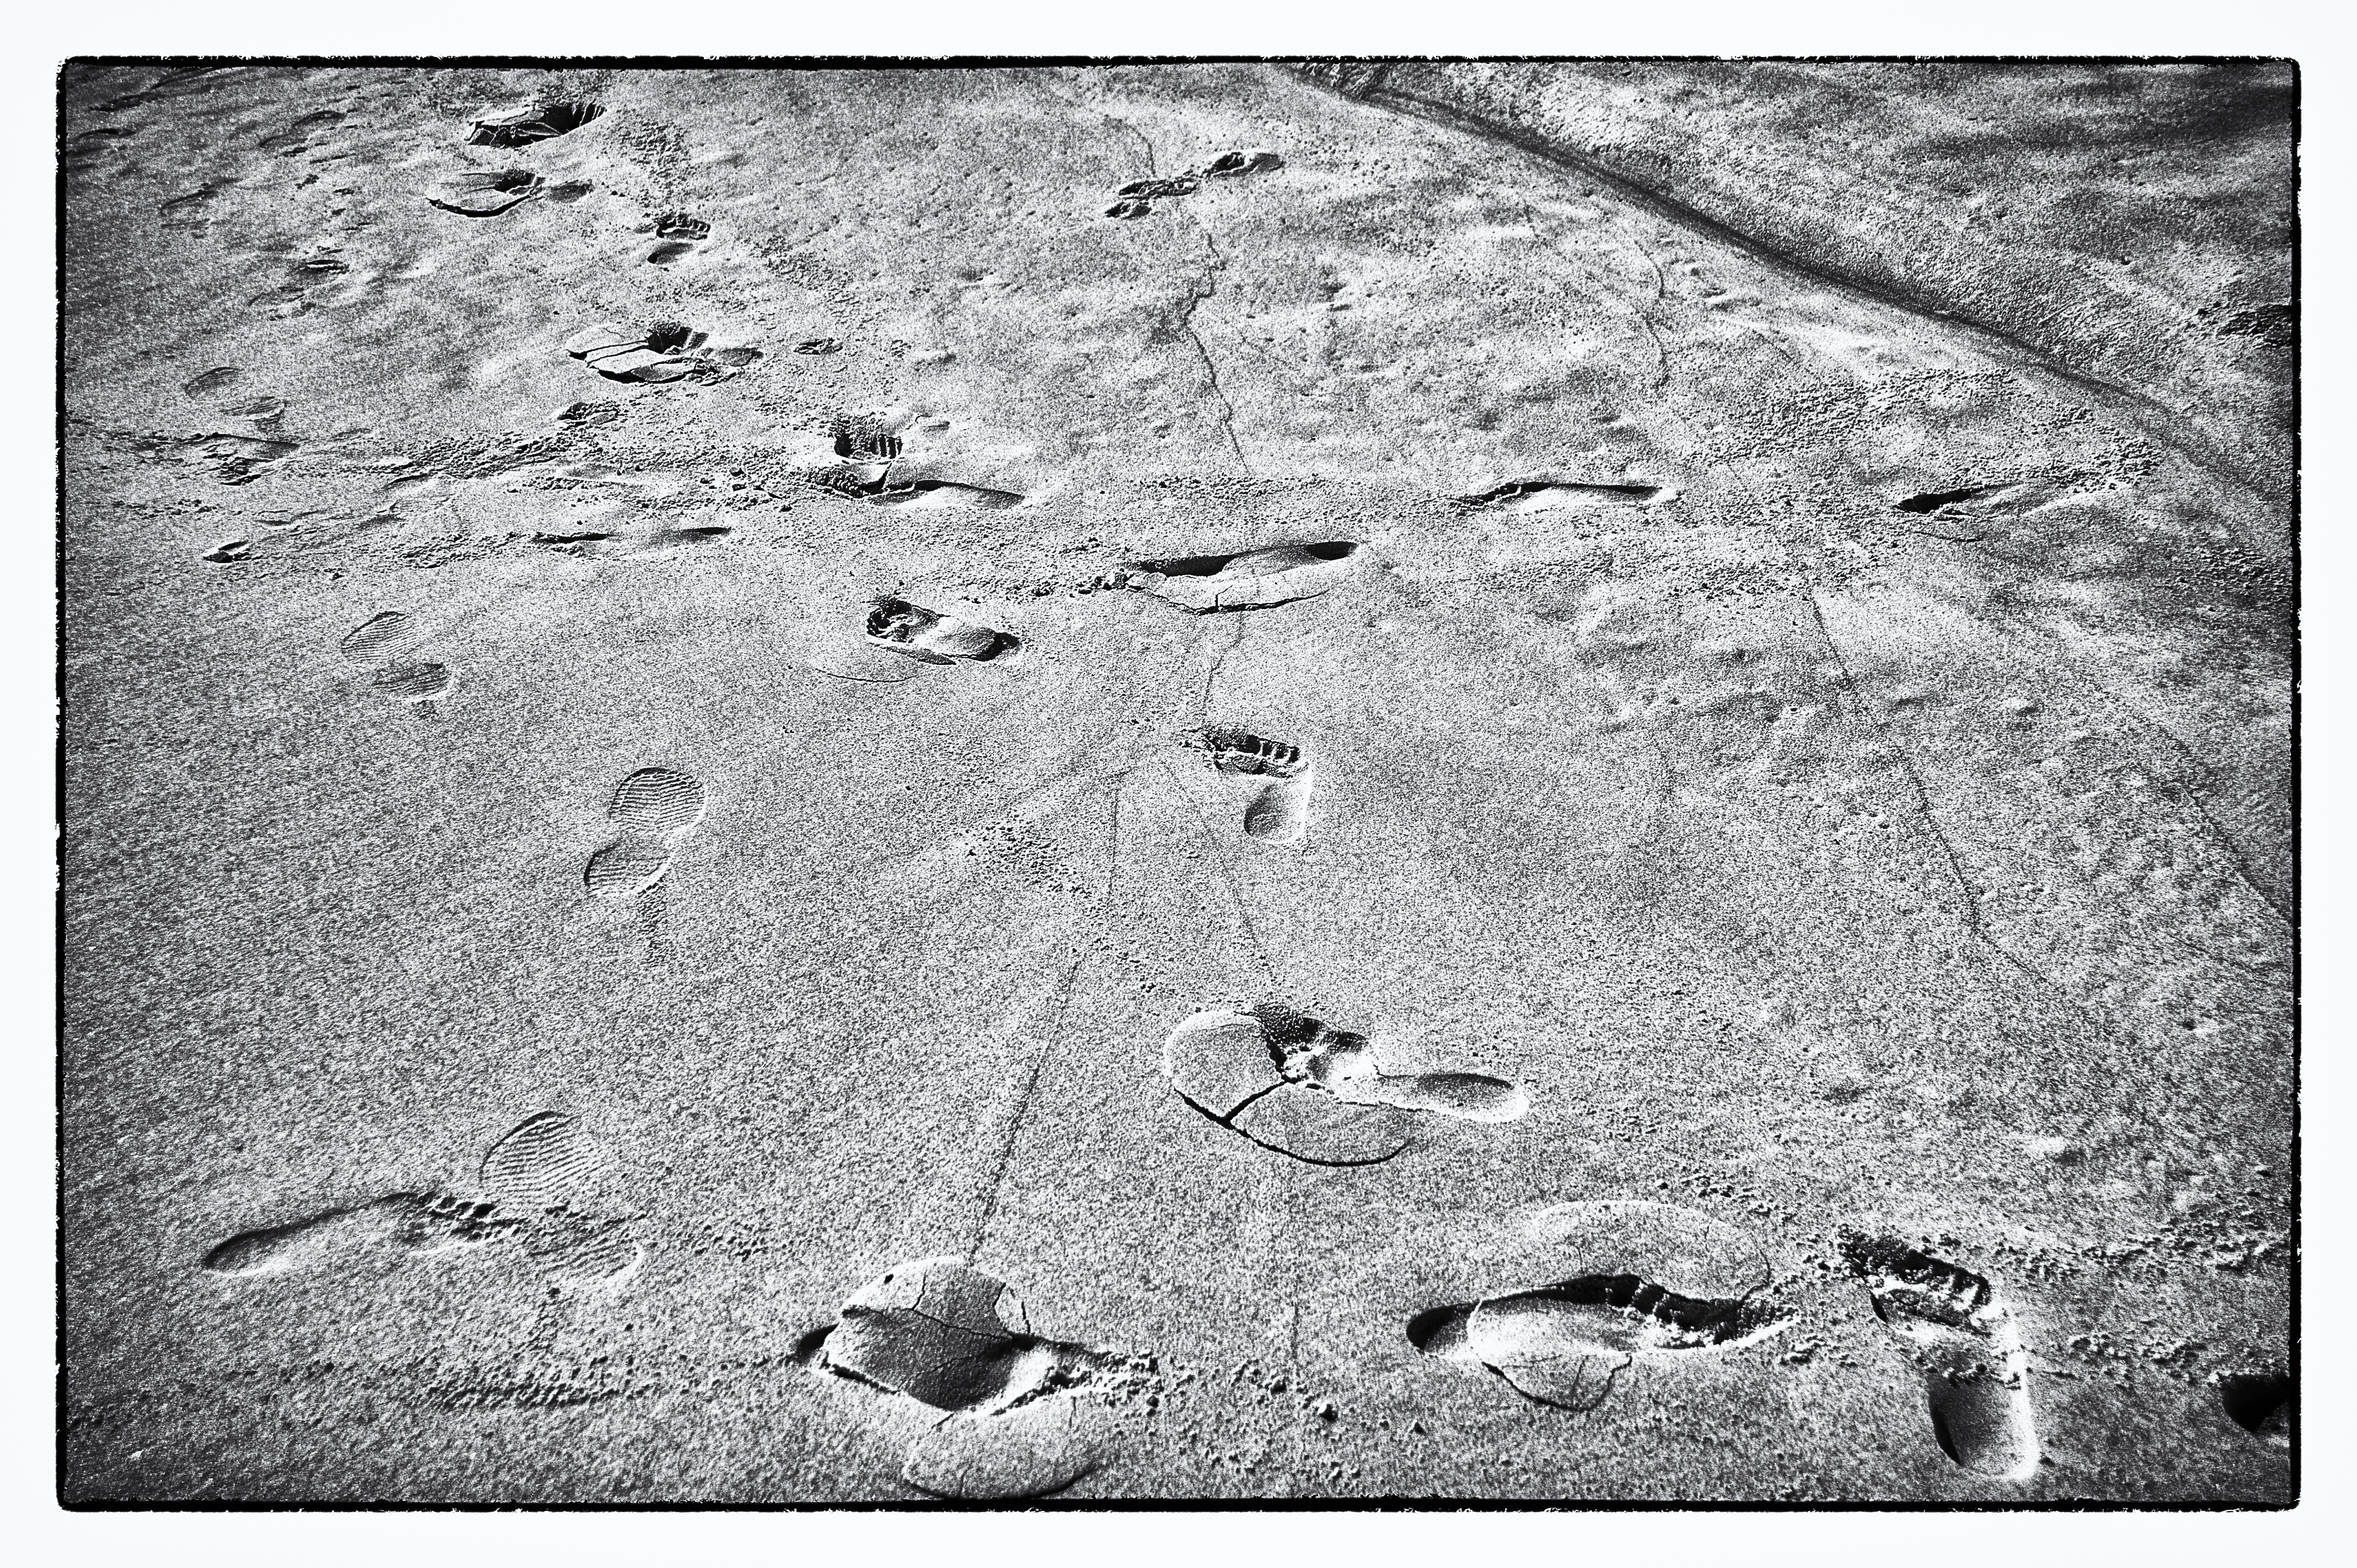 https://www.dailymaverick.co.za/wp-content/uploads/Footprints-on-Clifton-4th-Beach.jpg